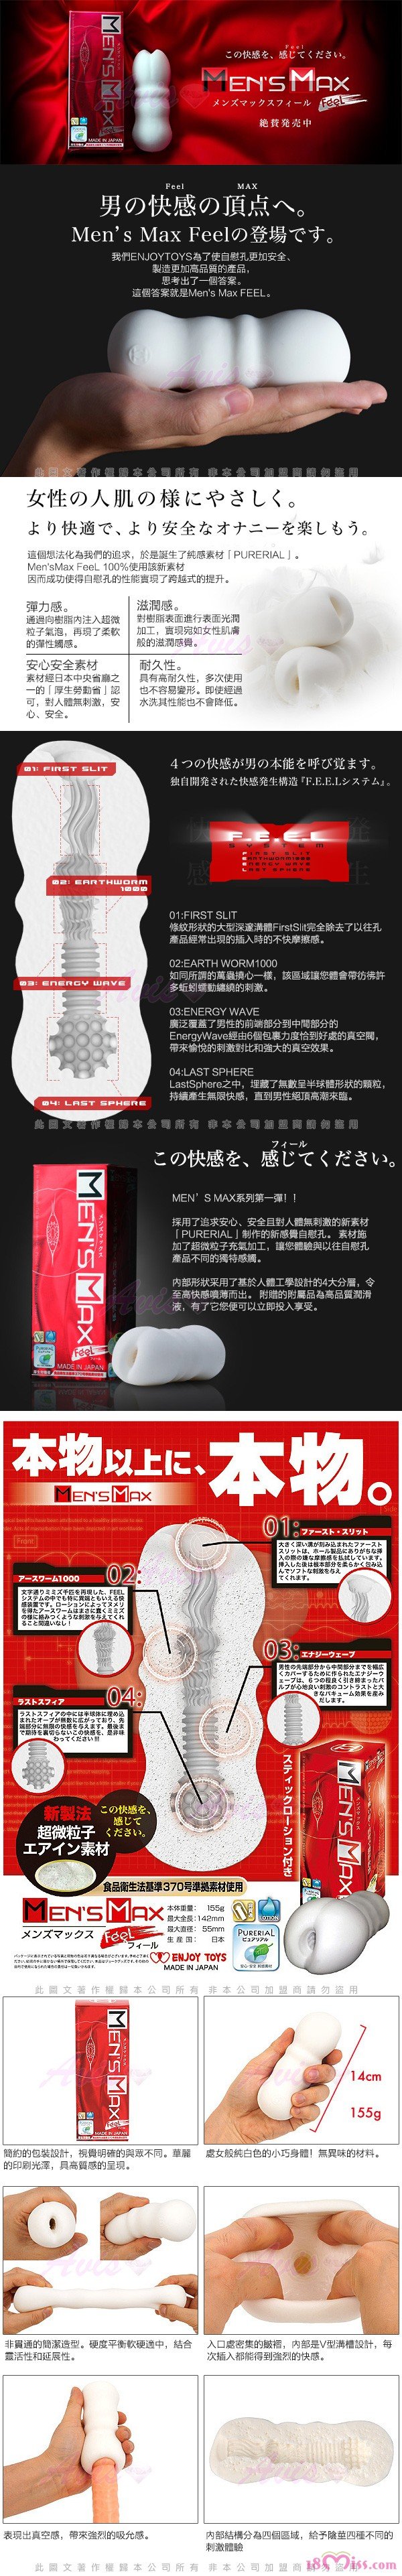 ></p>

 <span> </span><p>．商品名稱：日本Men's Max-FEEL 1 網路高度推薦款 純感嫩肌名器-紅 *1 <br>．商品尺寸：長約14cm <br>．商品材質：高級矽膠 <br>．商品顏色：外包裝：紅</p>

</div>

<img src=